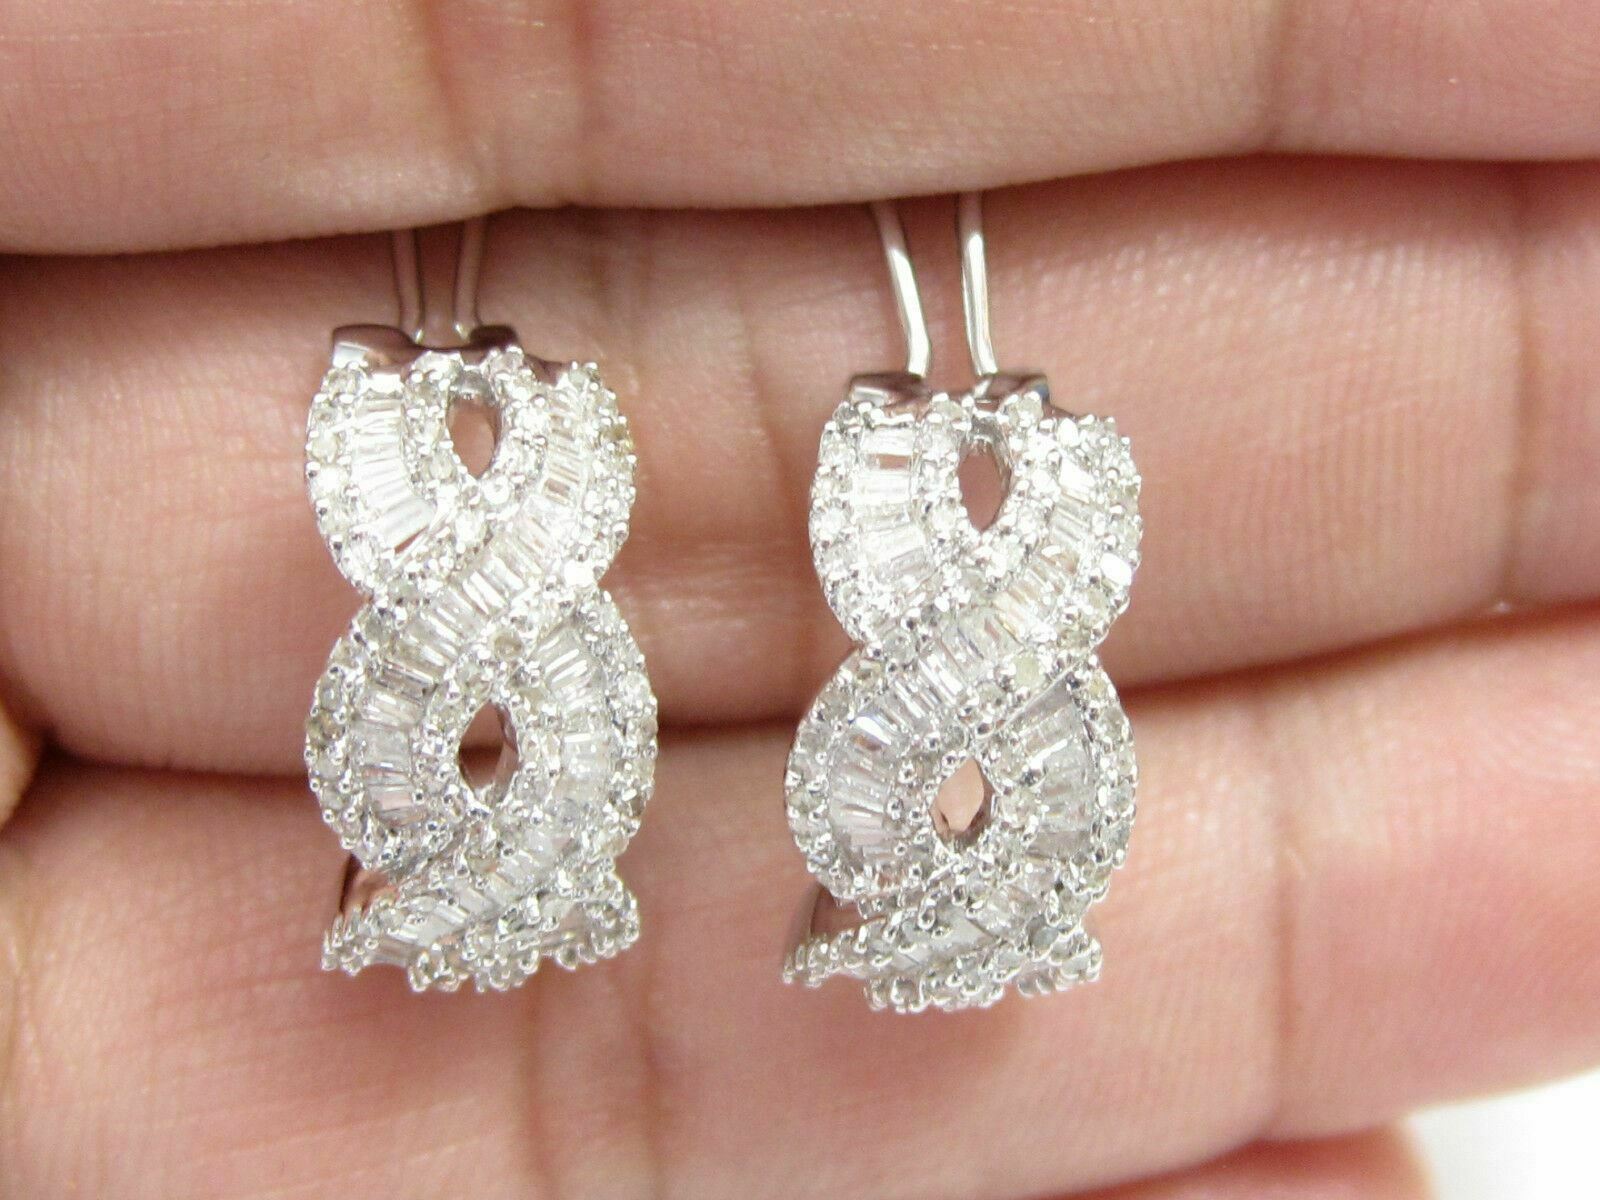 1.60 TCW Natural Baguette Diamond Huggie Earrings H SI2 18k White Gold